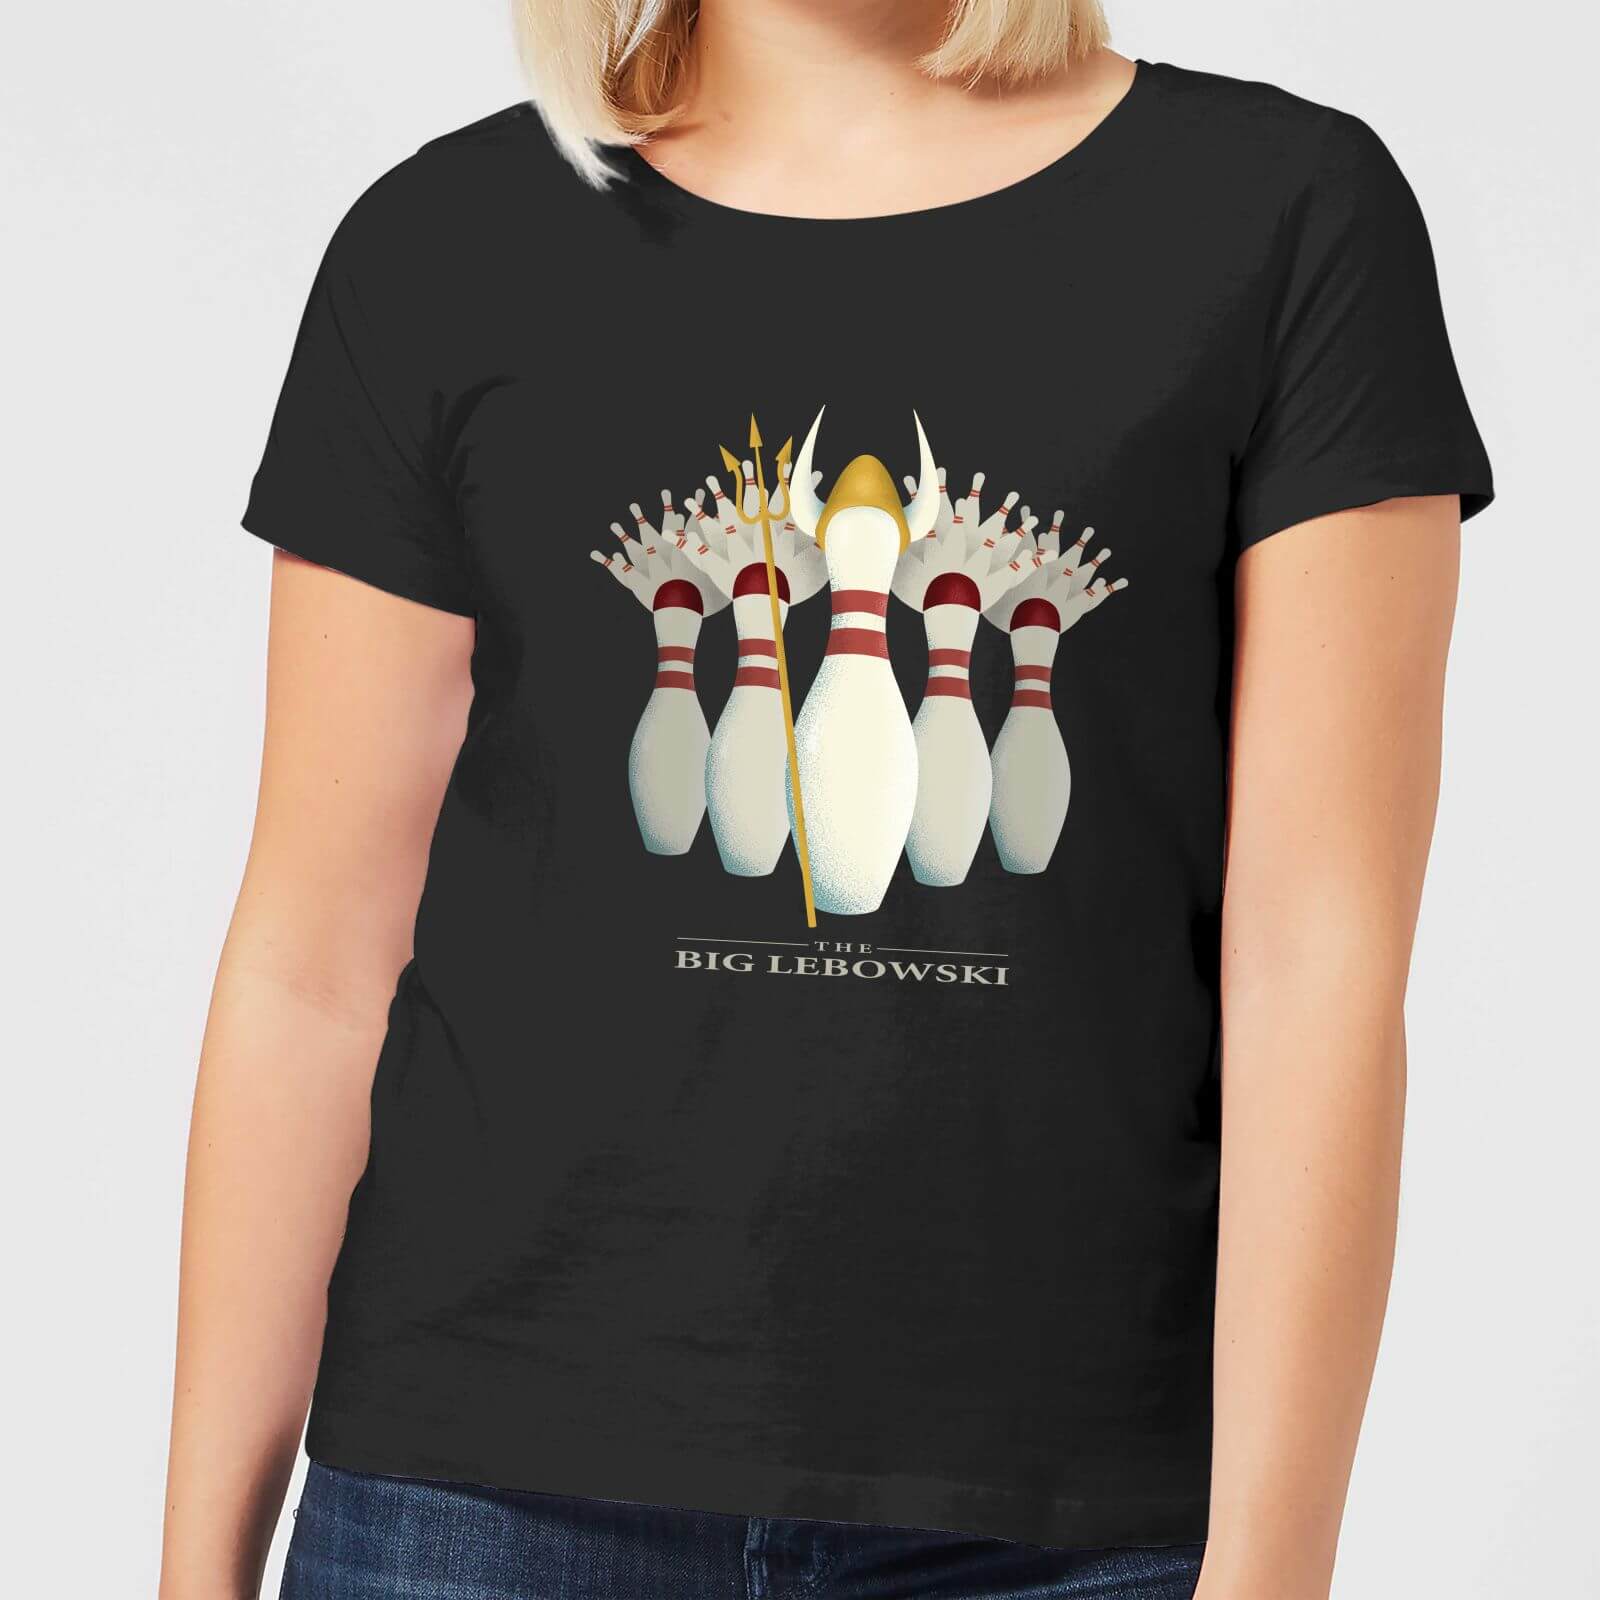 The Big Lebowski Pin Girls Women's T-Shirt - Black - 4XL - Black